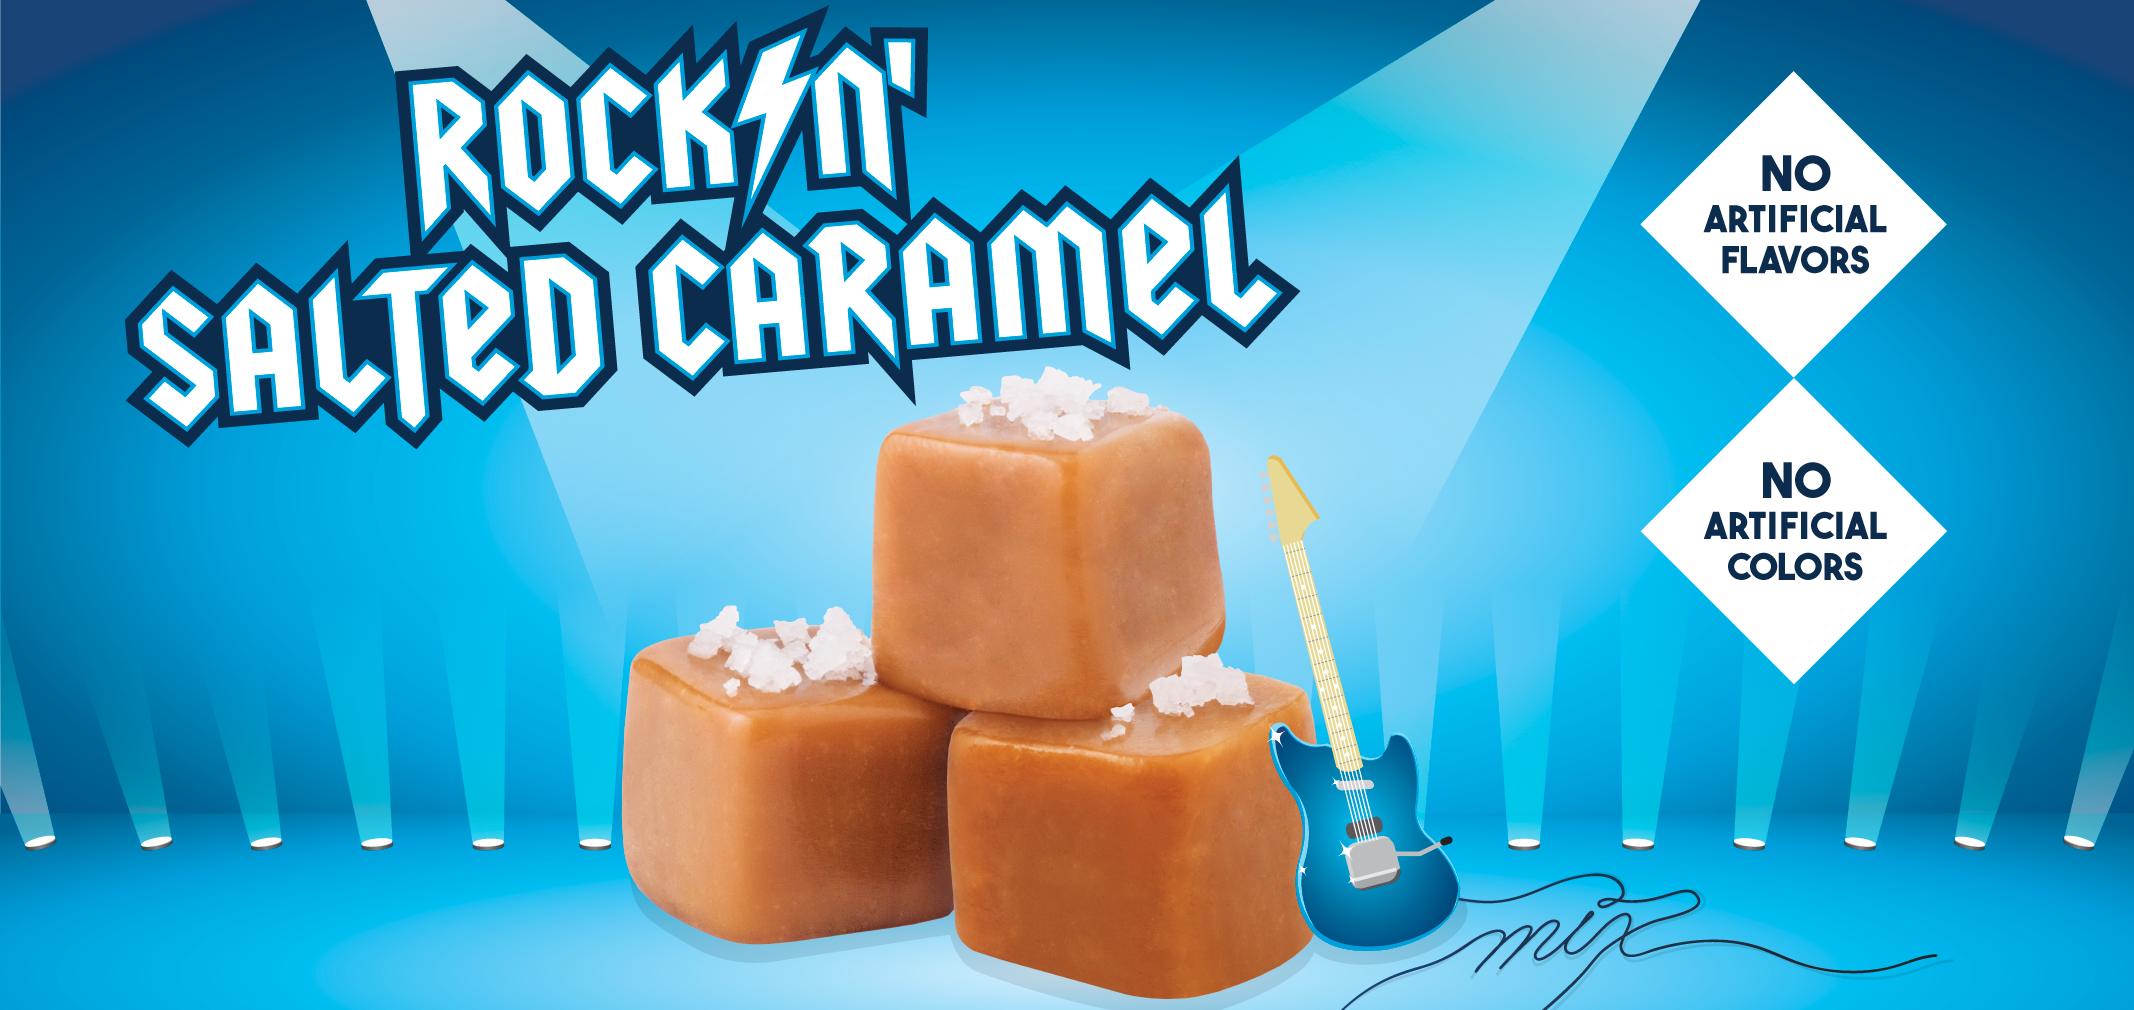 rockin' salted caramel label image